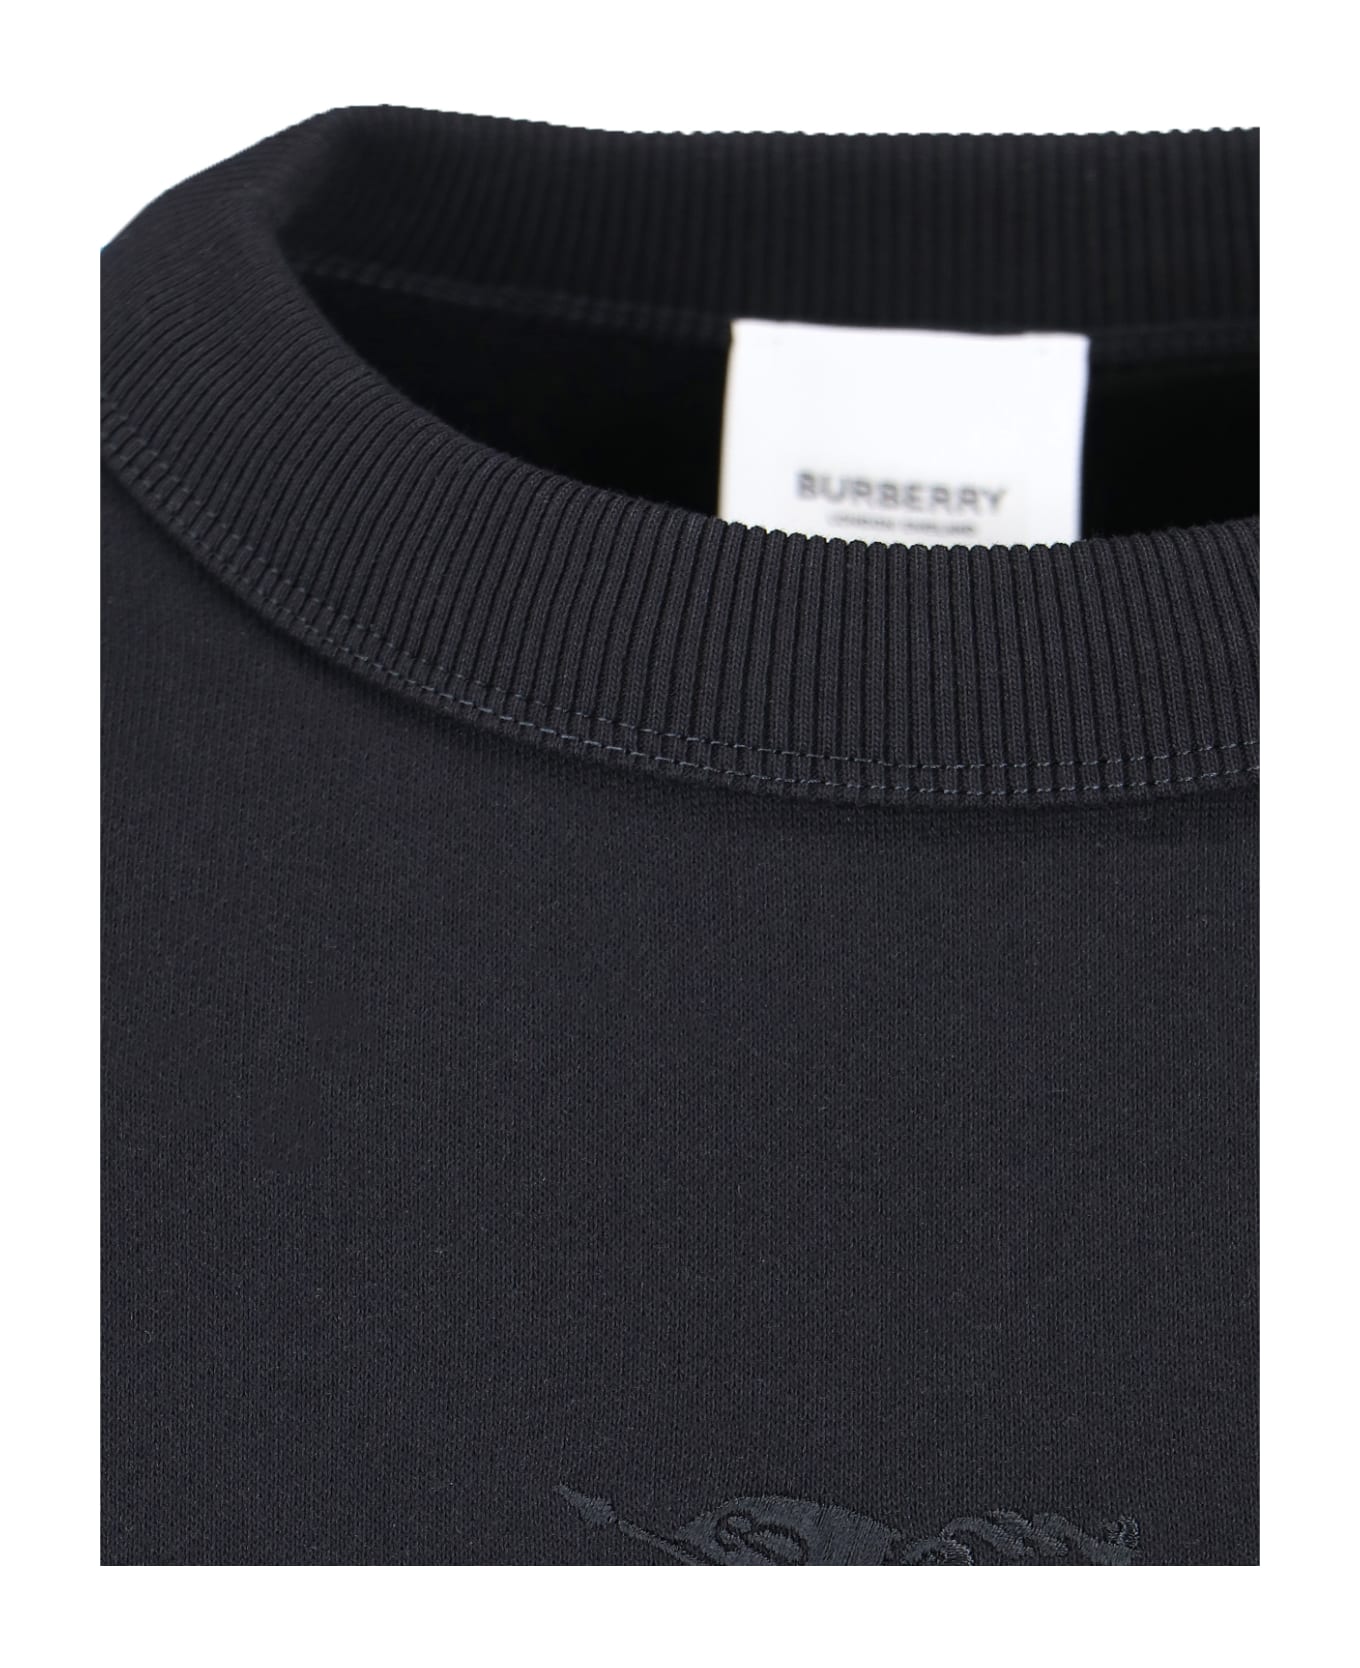 Burberry Ekd Black Crew-neck Sweatshirt - Black フリース